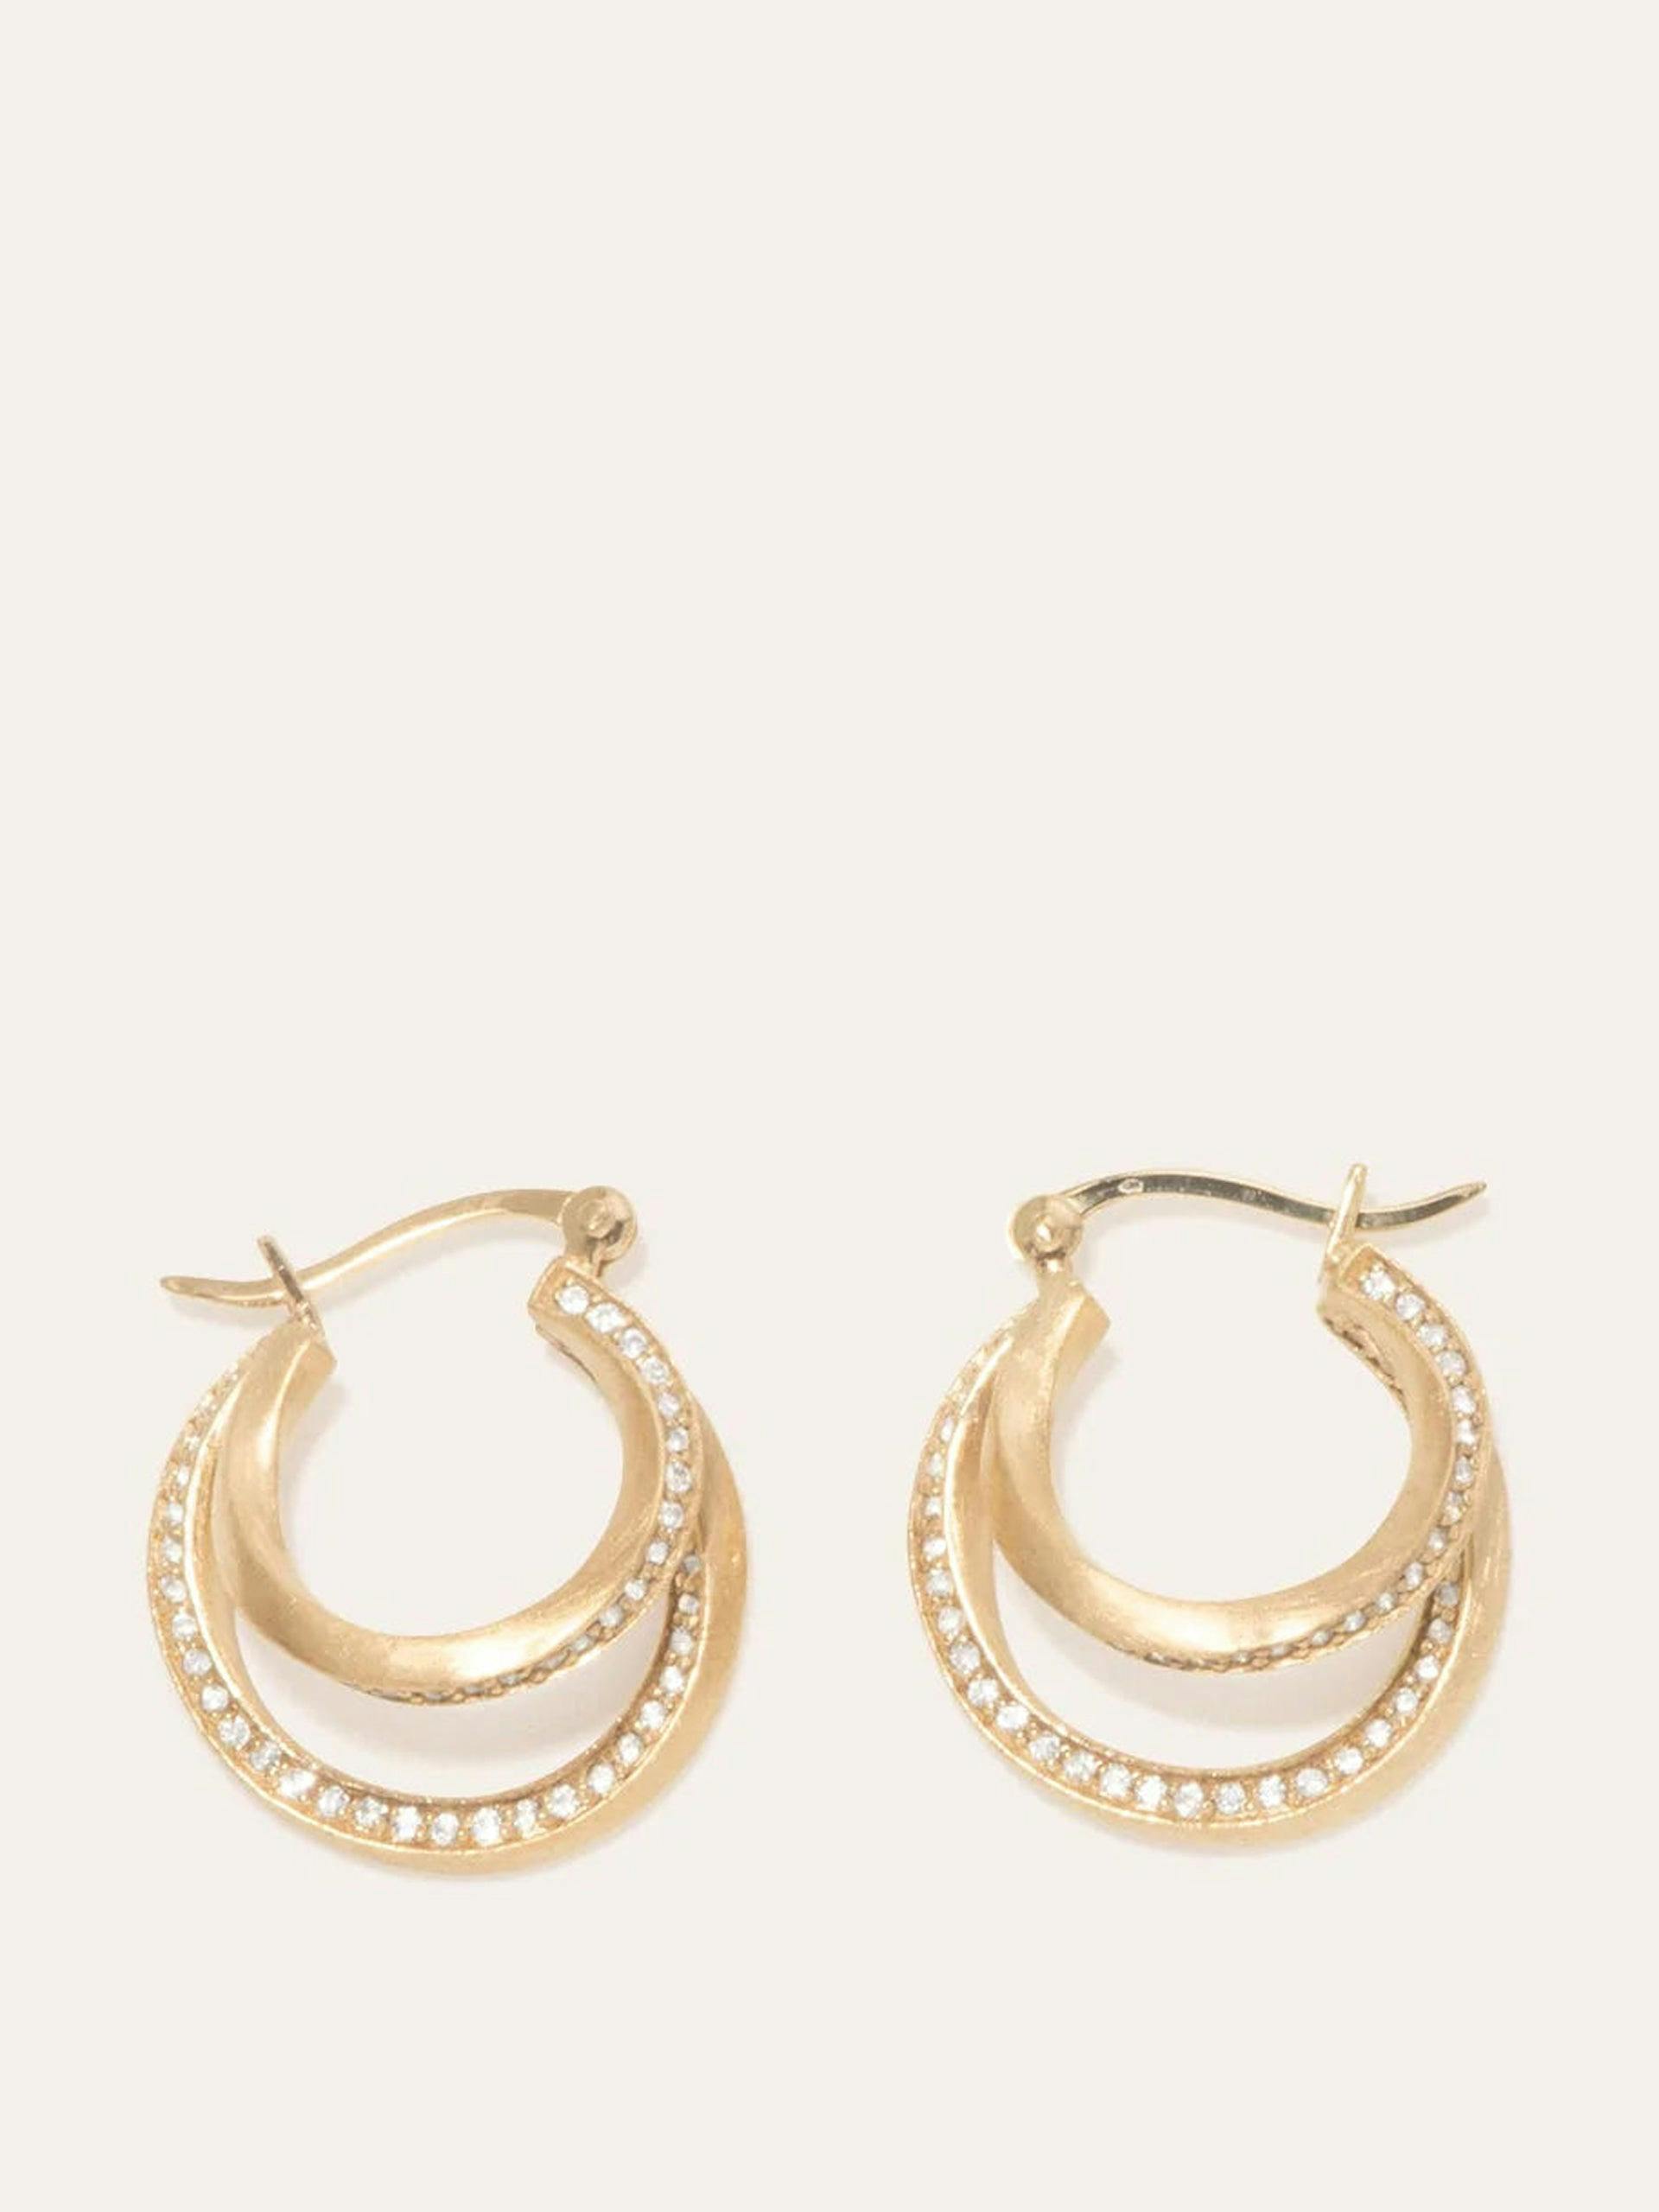 "Suburbs" gold vermeil earrings